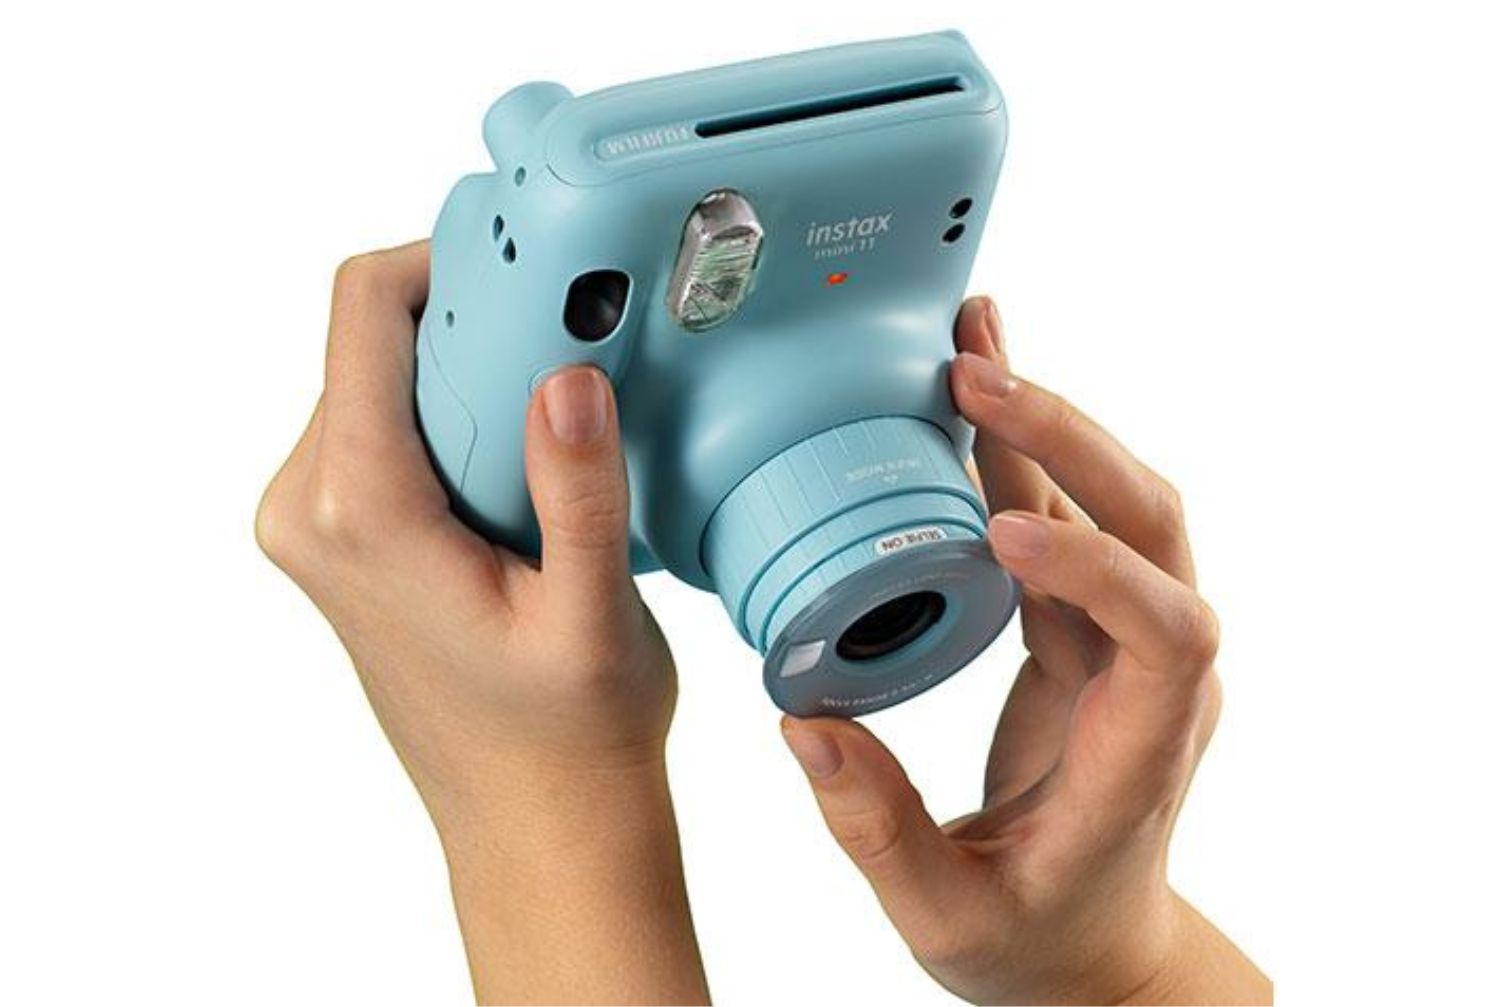 Fujifilm Instax Mini 11 - Cámara instantánea